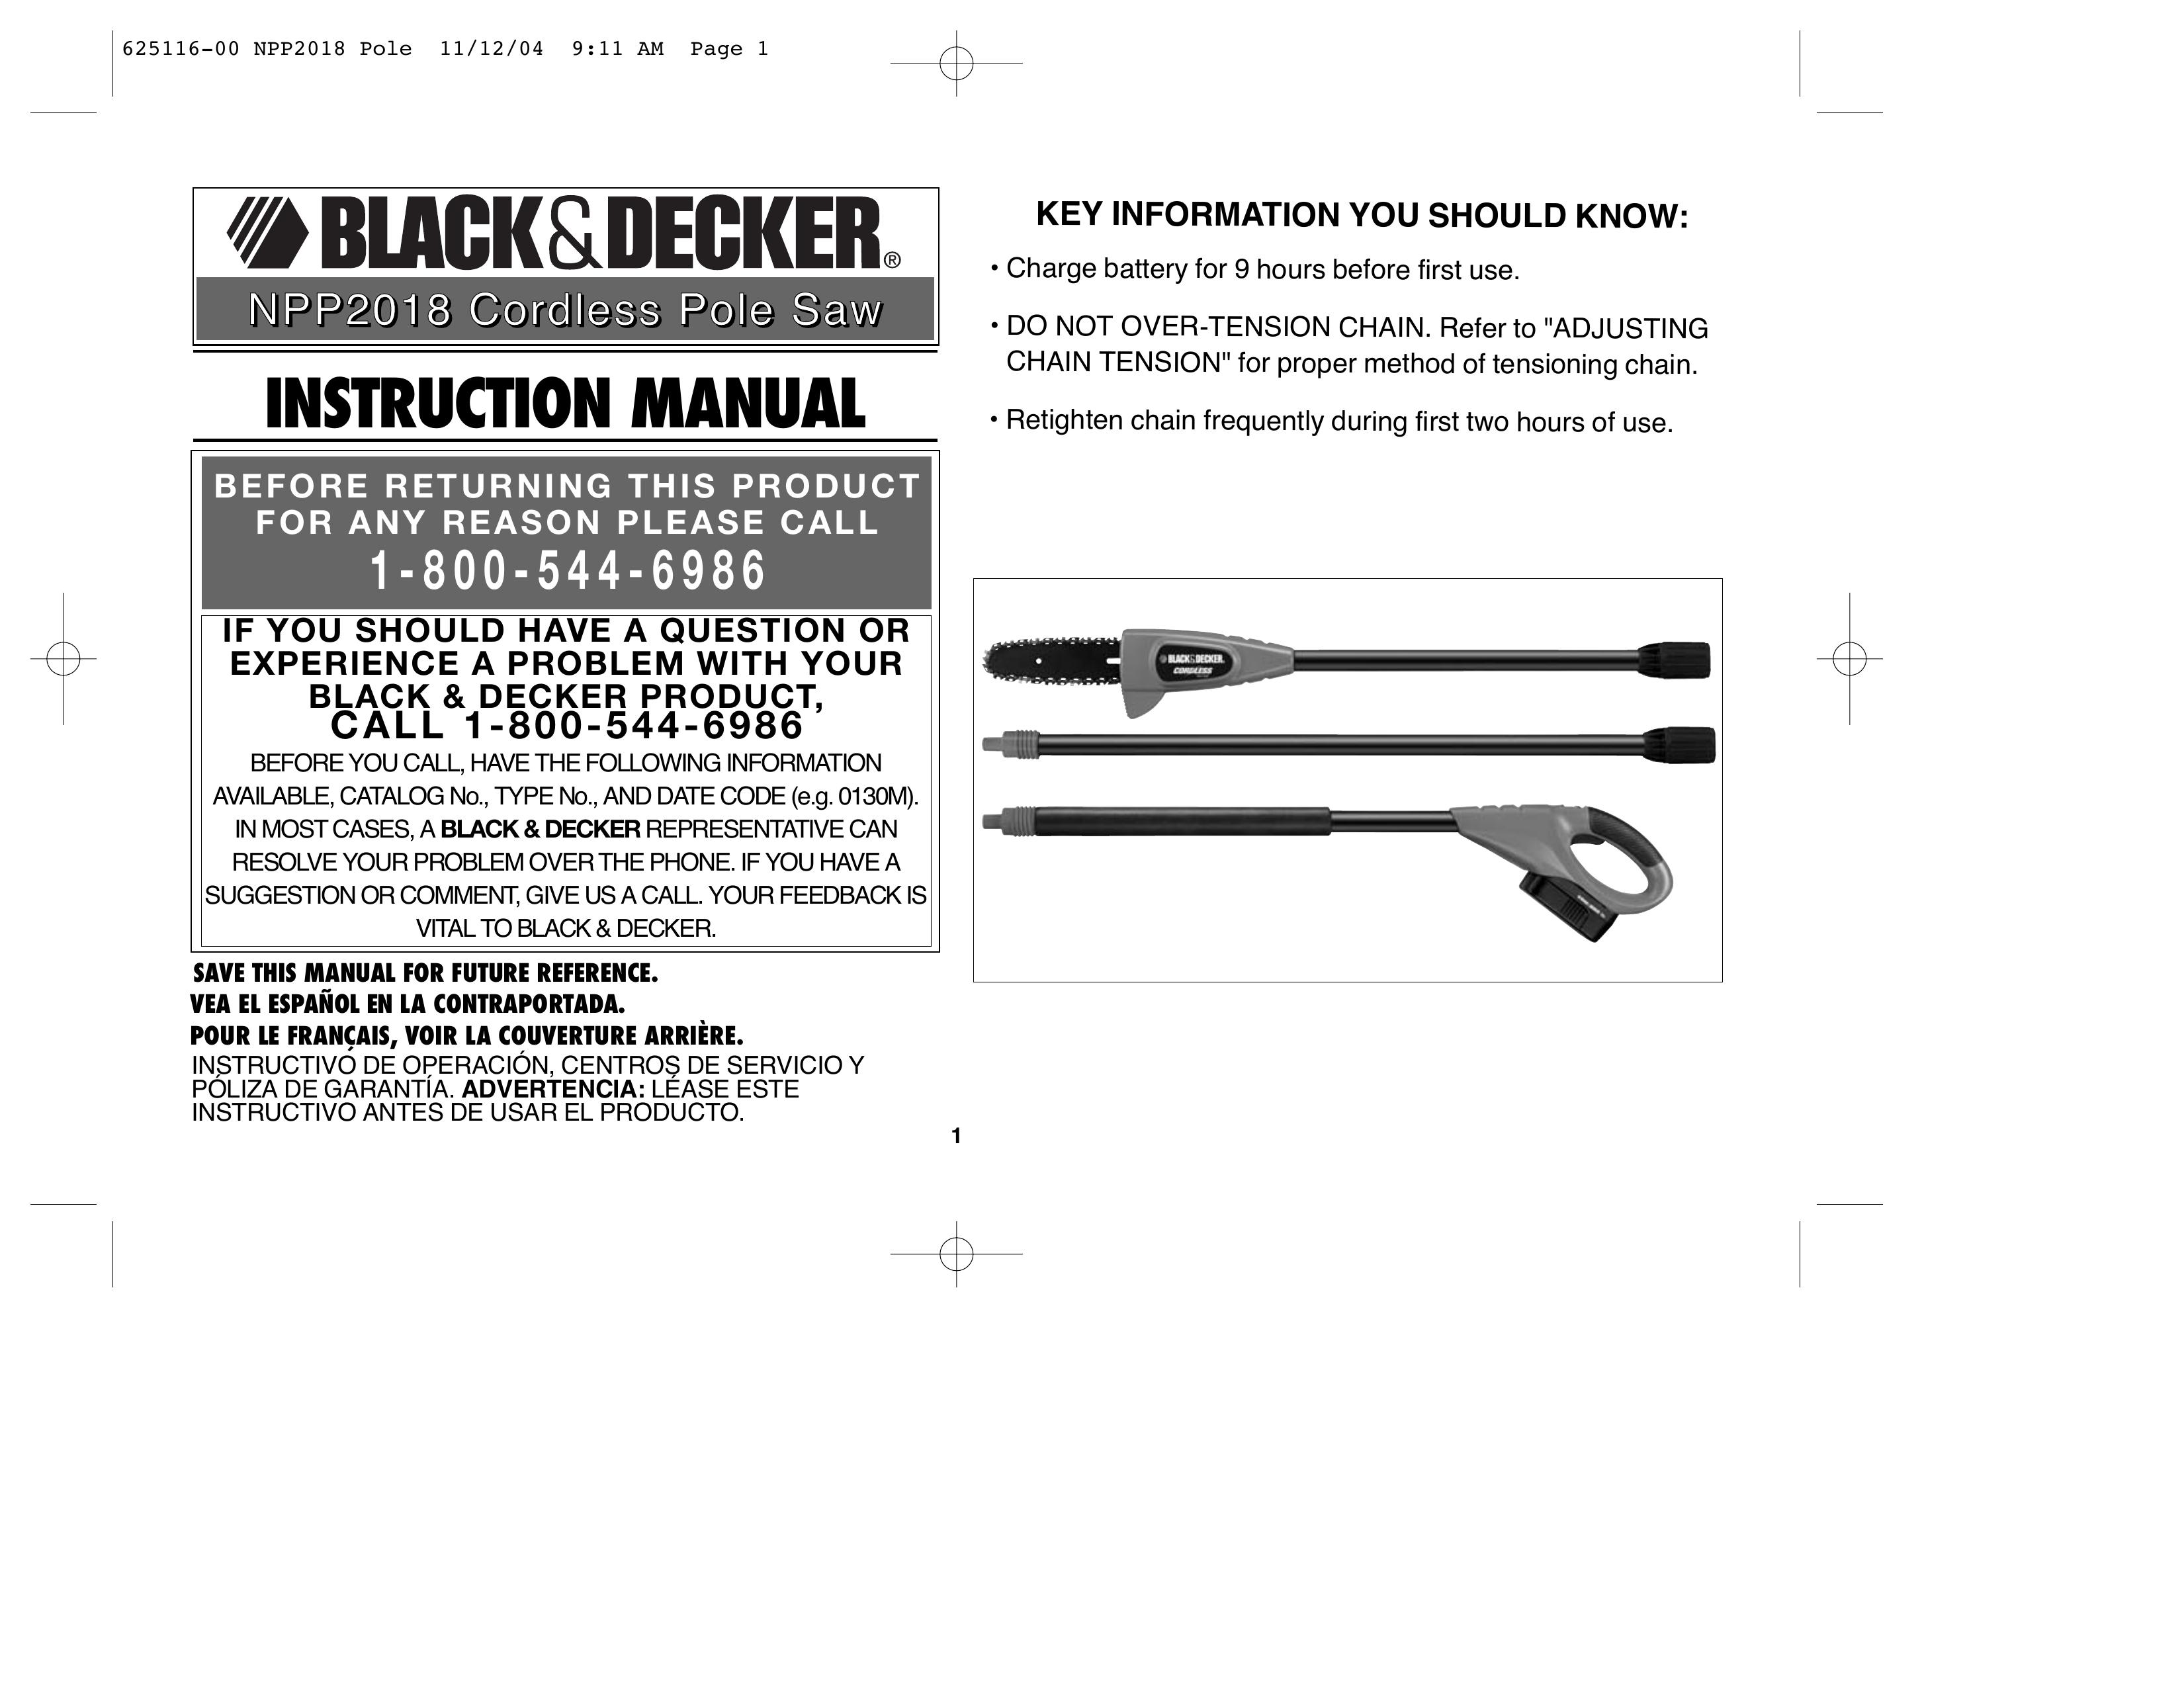 Black & Decker NPP2018 Pole Saw User Manual